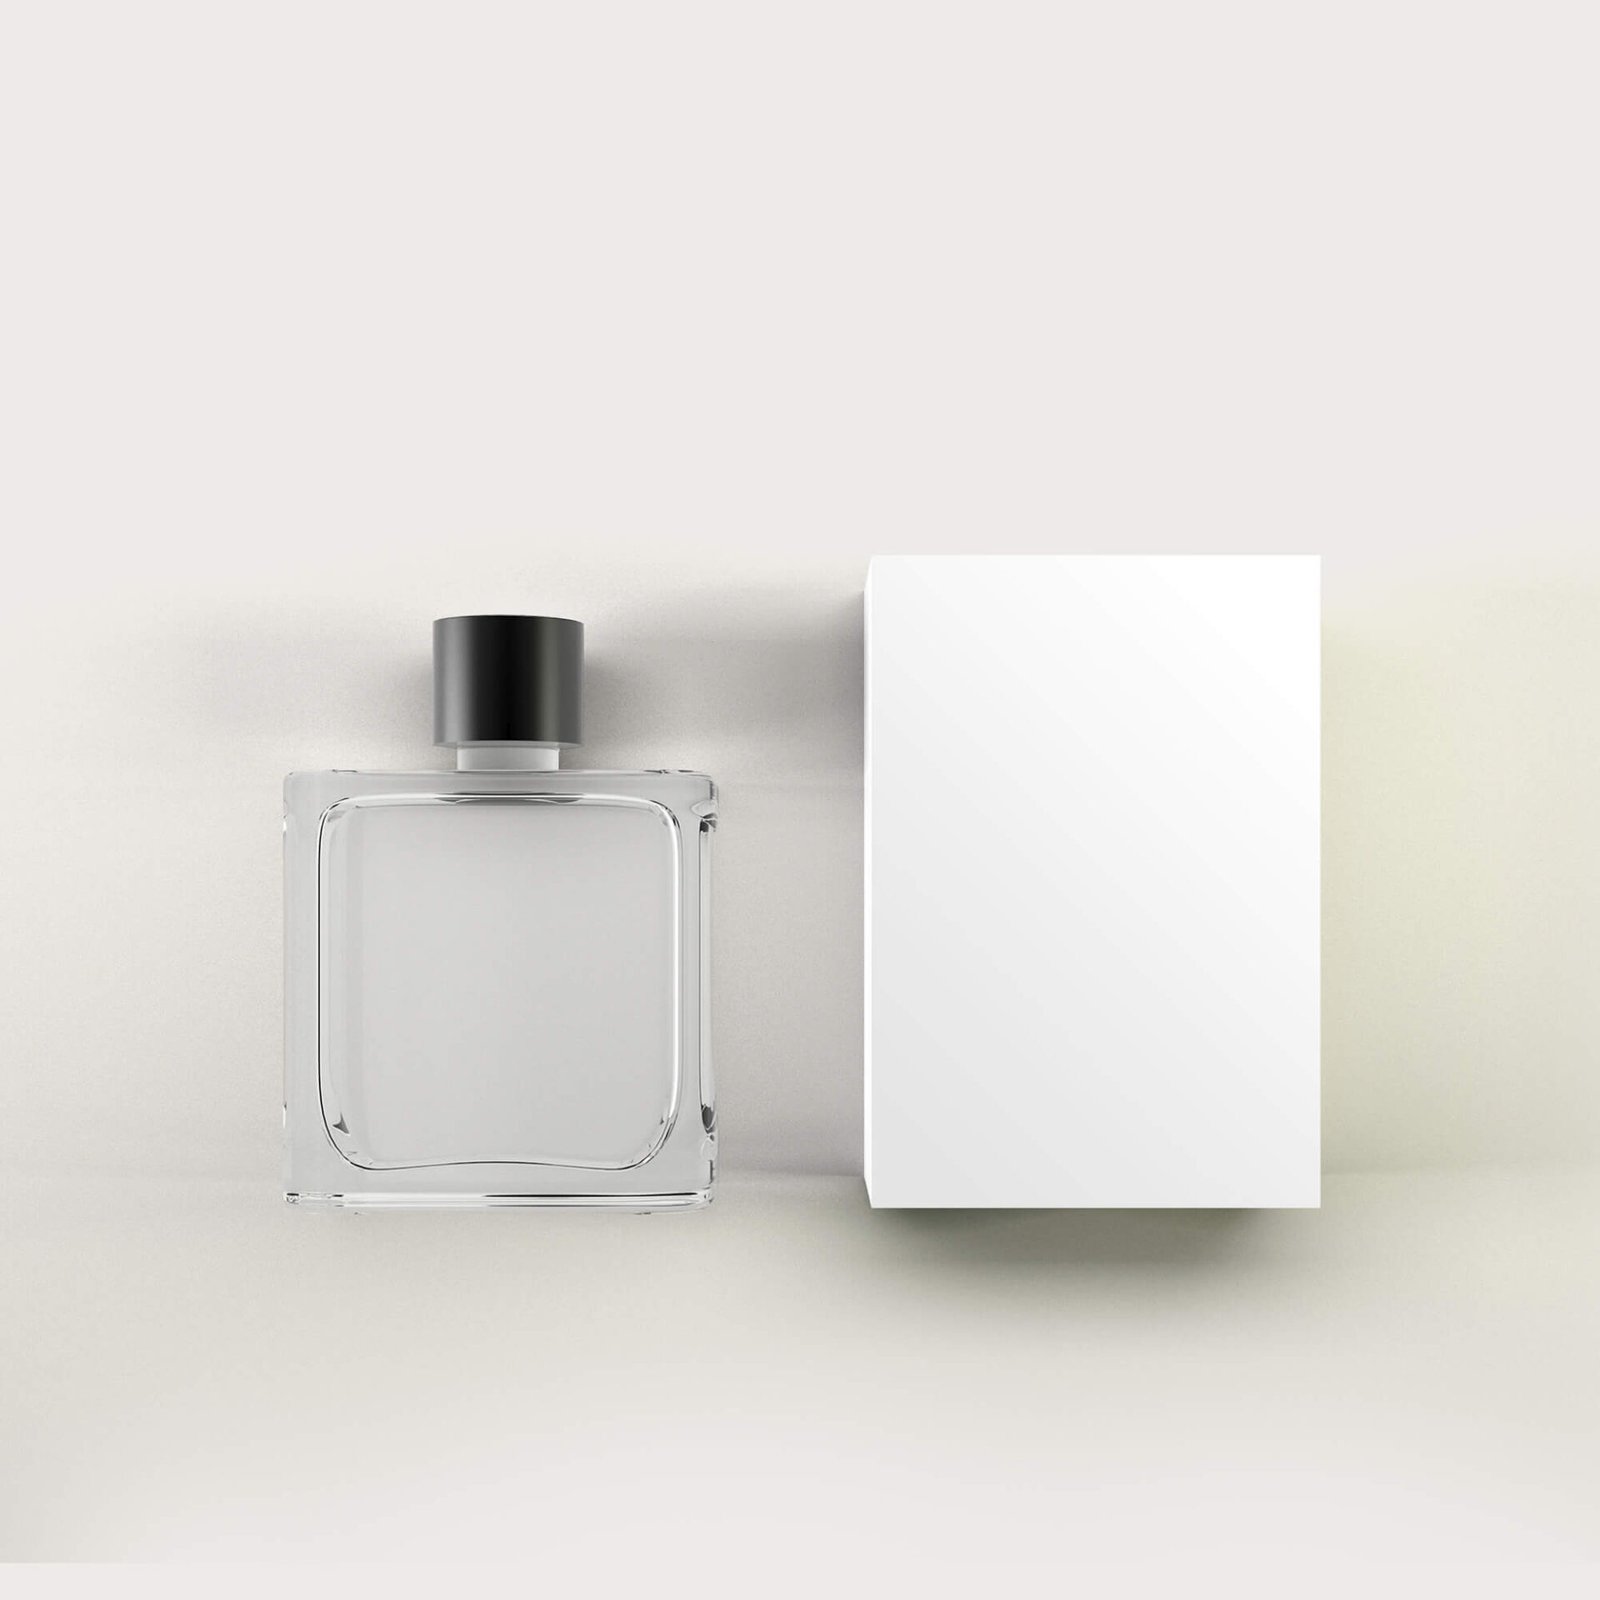 Download Free Perfume Packaging Mockup PSD Template - Mockup Den